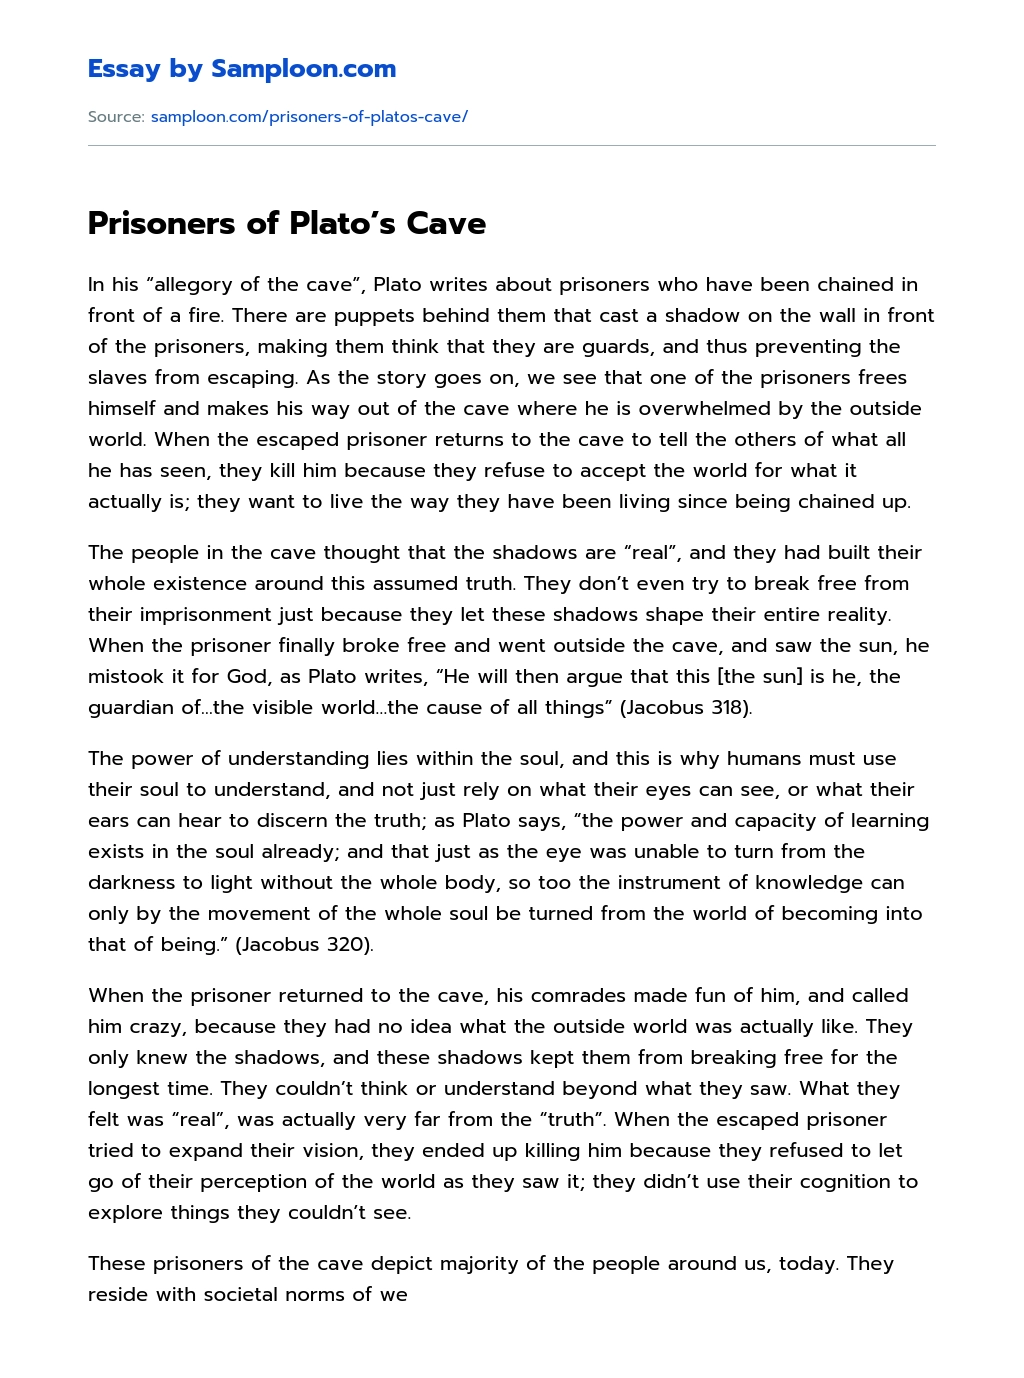 Prisoners of Plato’s Cave essay